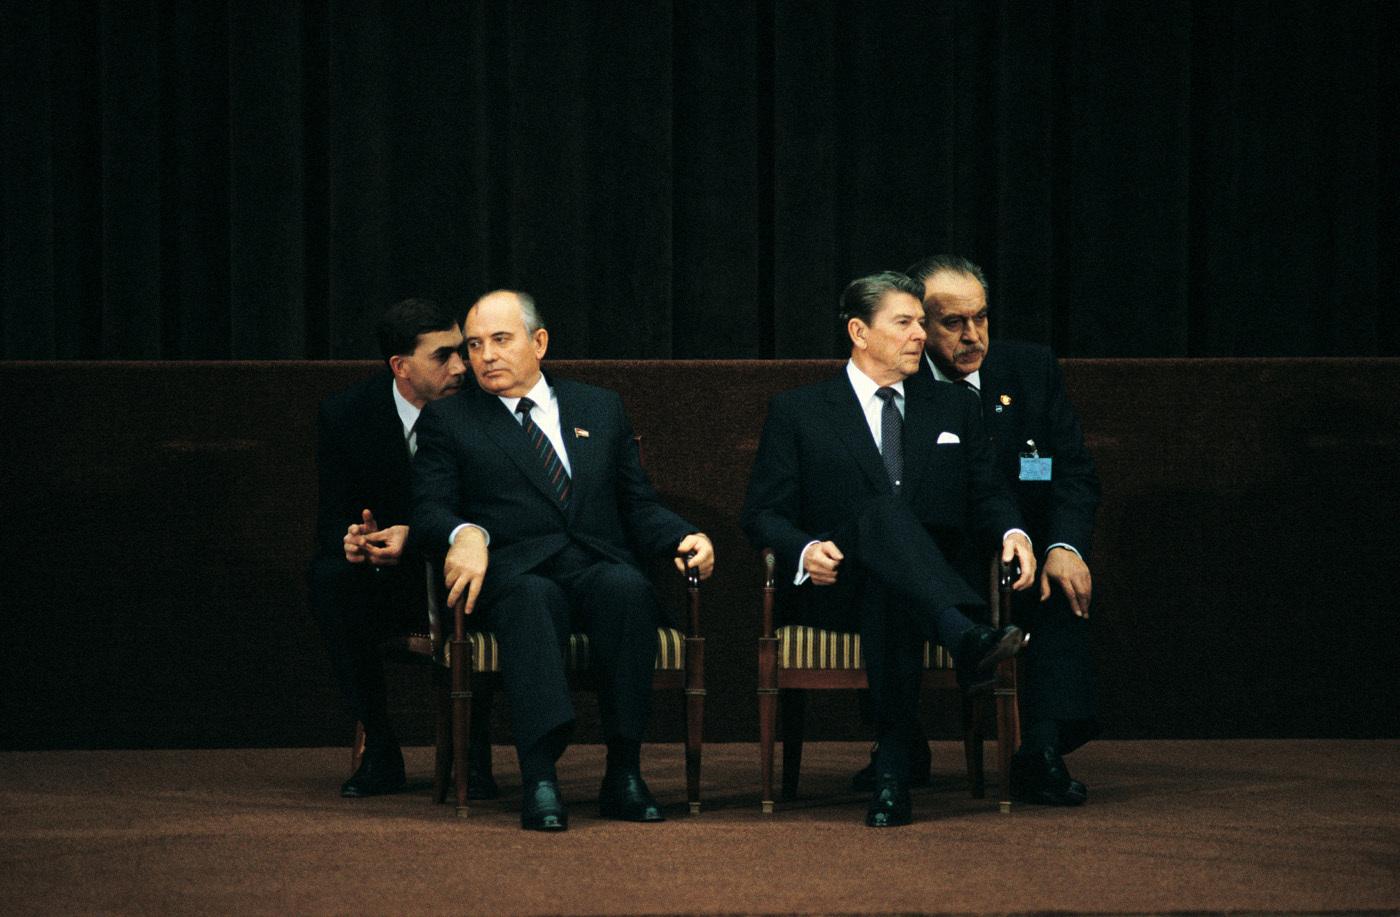 Reagan & Gorbachev, the first Summit : The Presidents  : David Burnett | Photographer